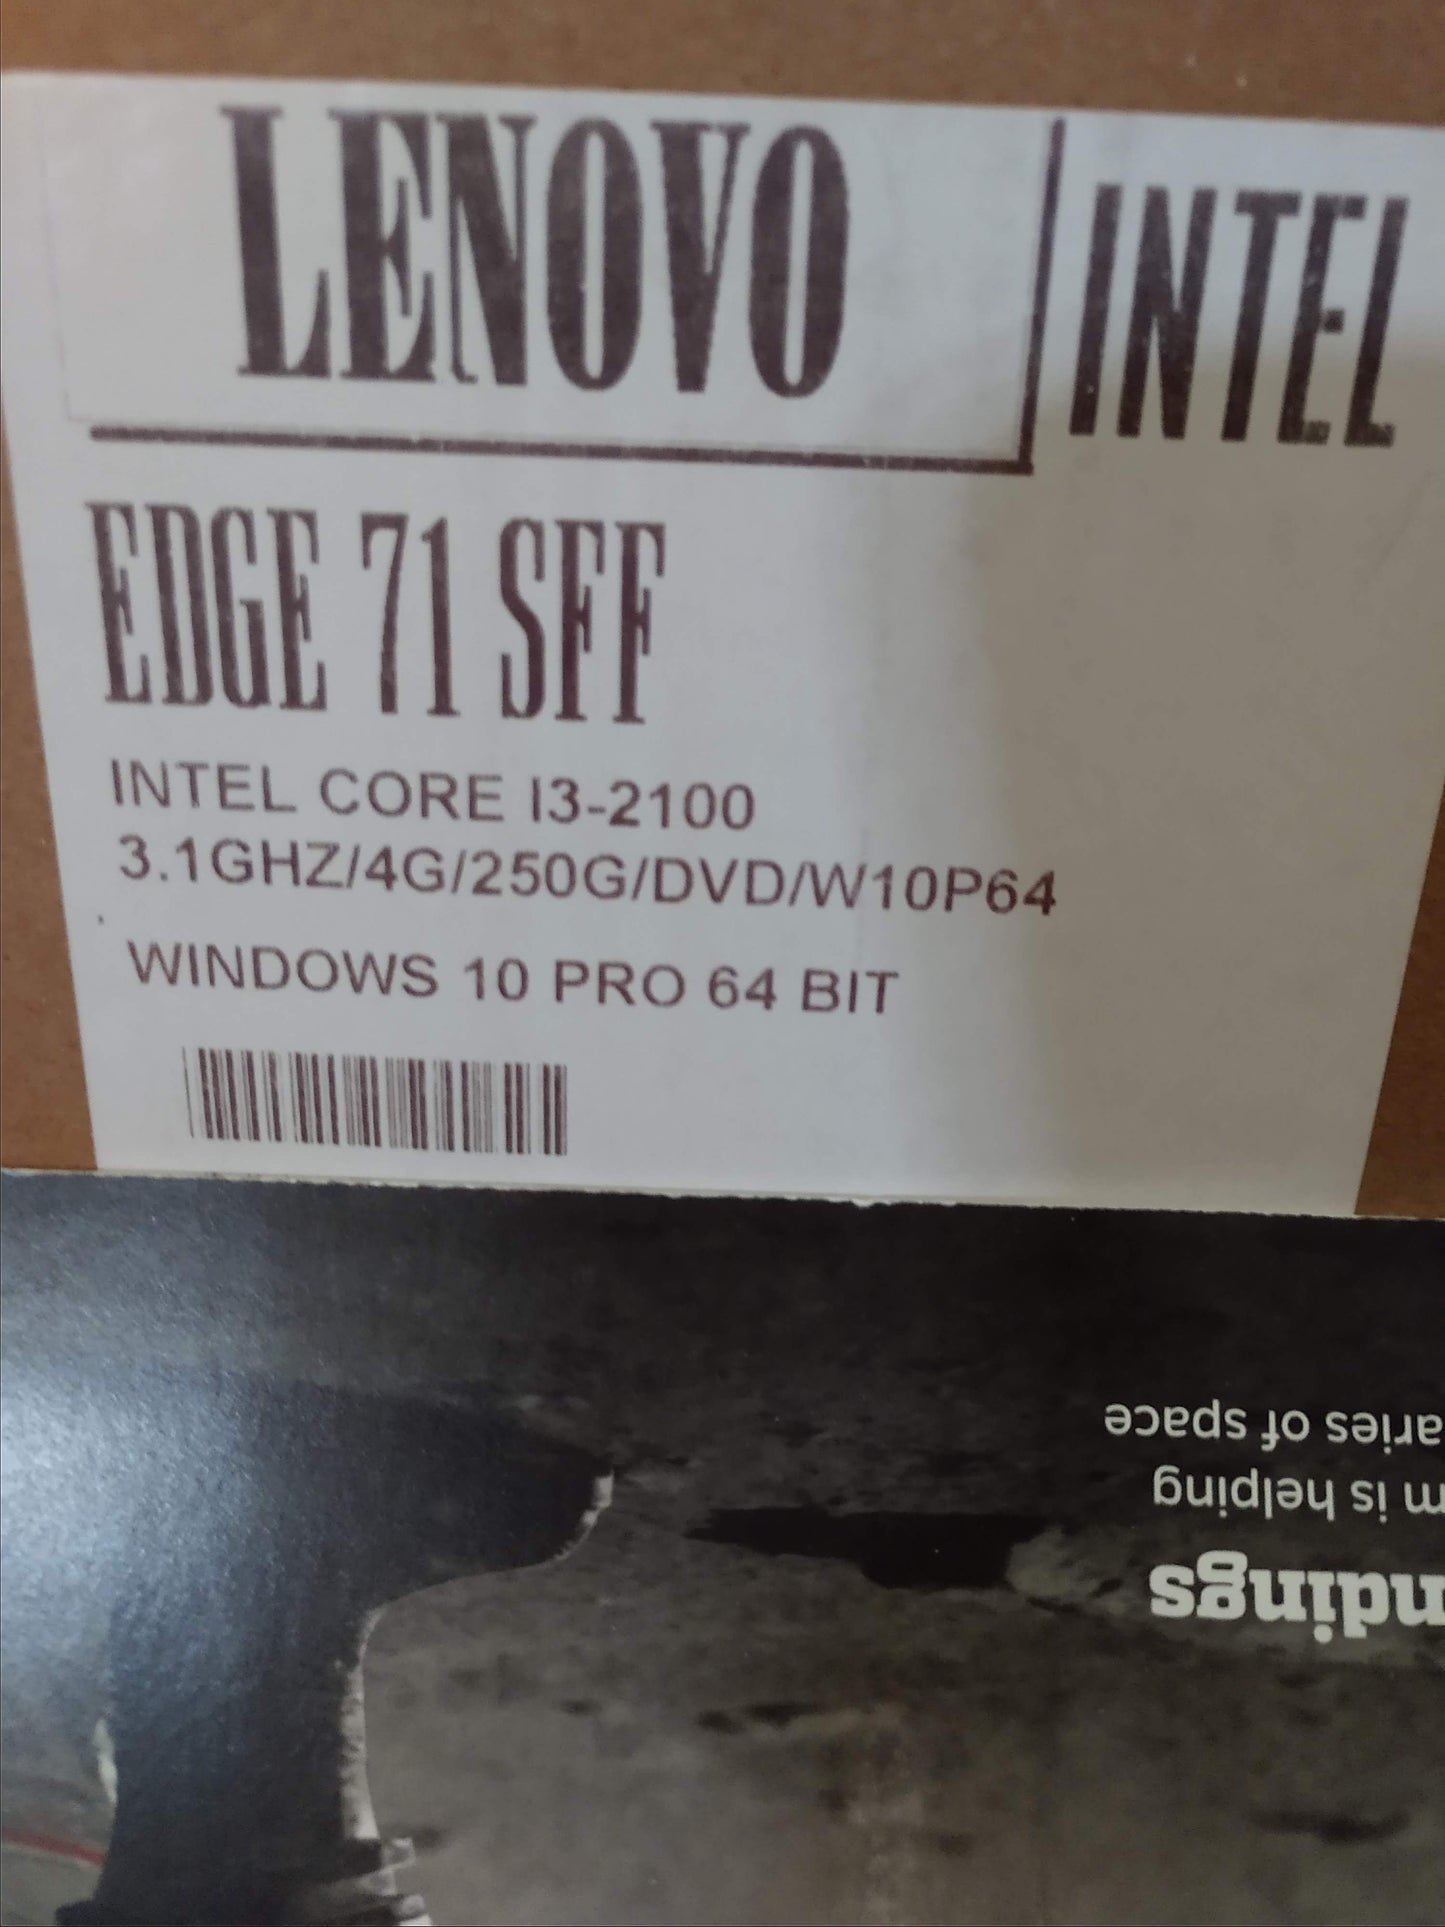 Lenovo E71 SFF Desktop i3-2100 3.1GHz, 4GB RAM, 250GB HDD, DVD, Windows 10 Pro (Refurbished)